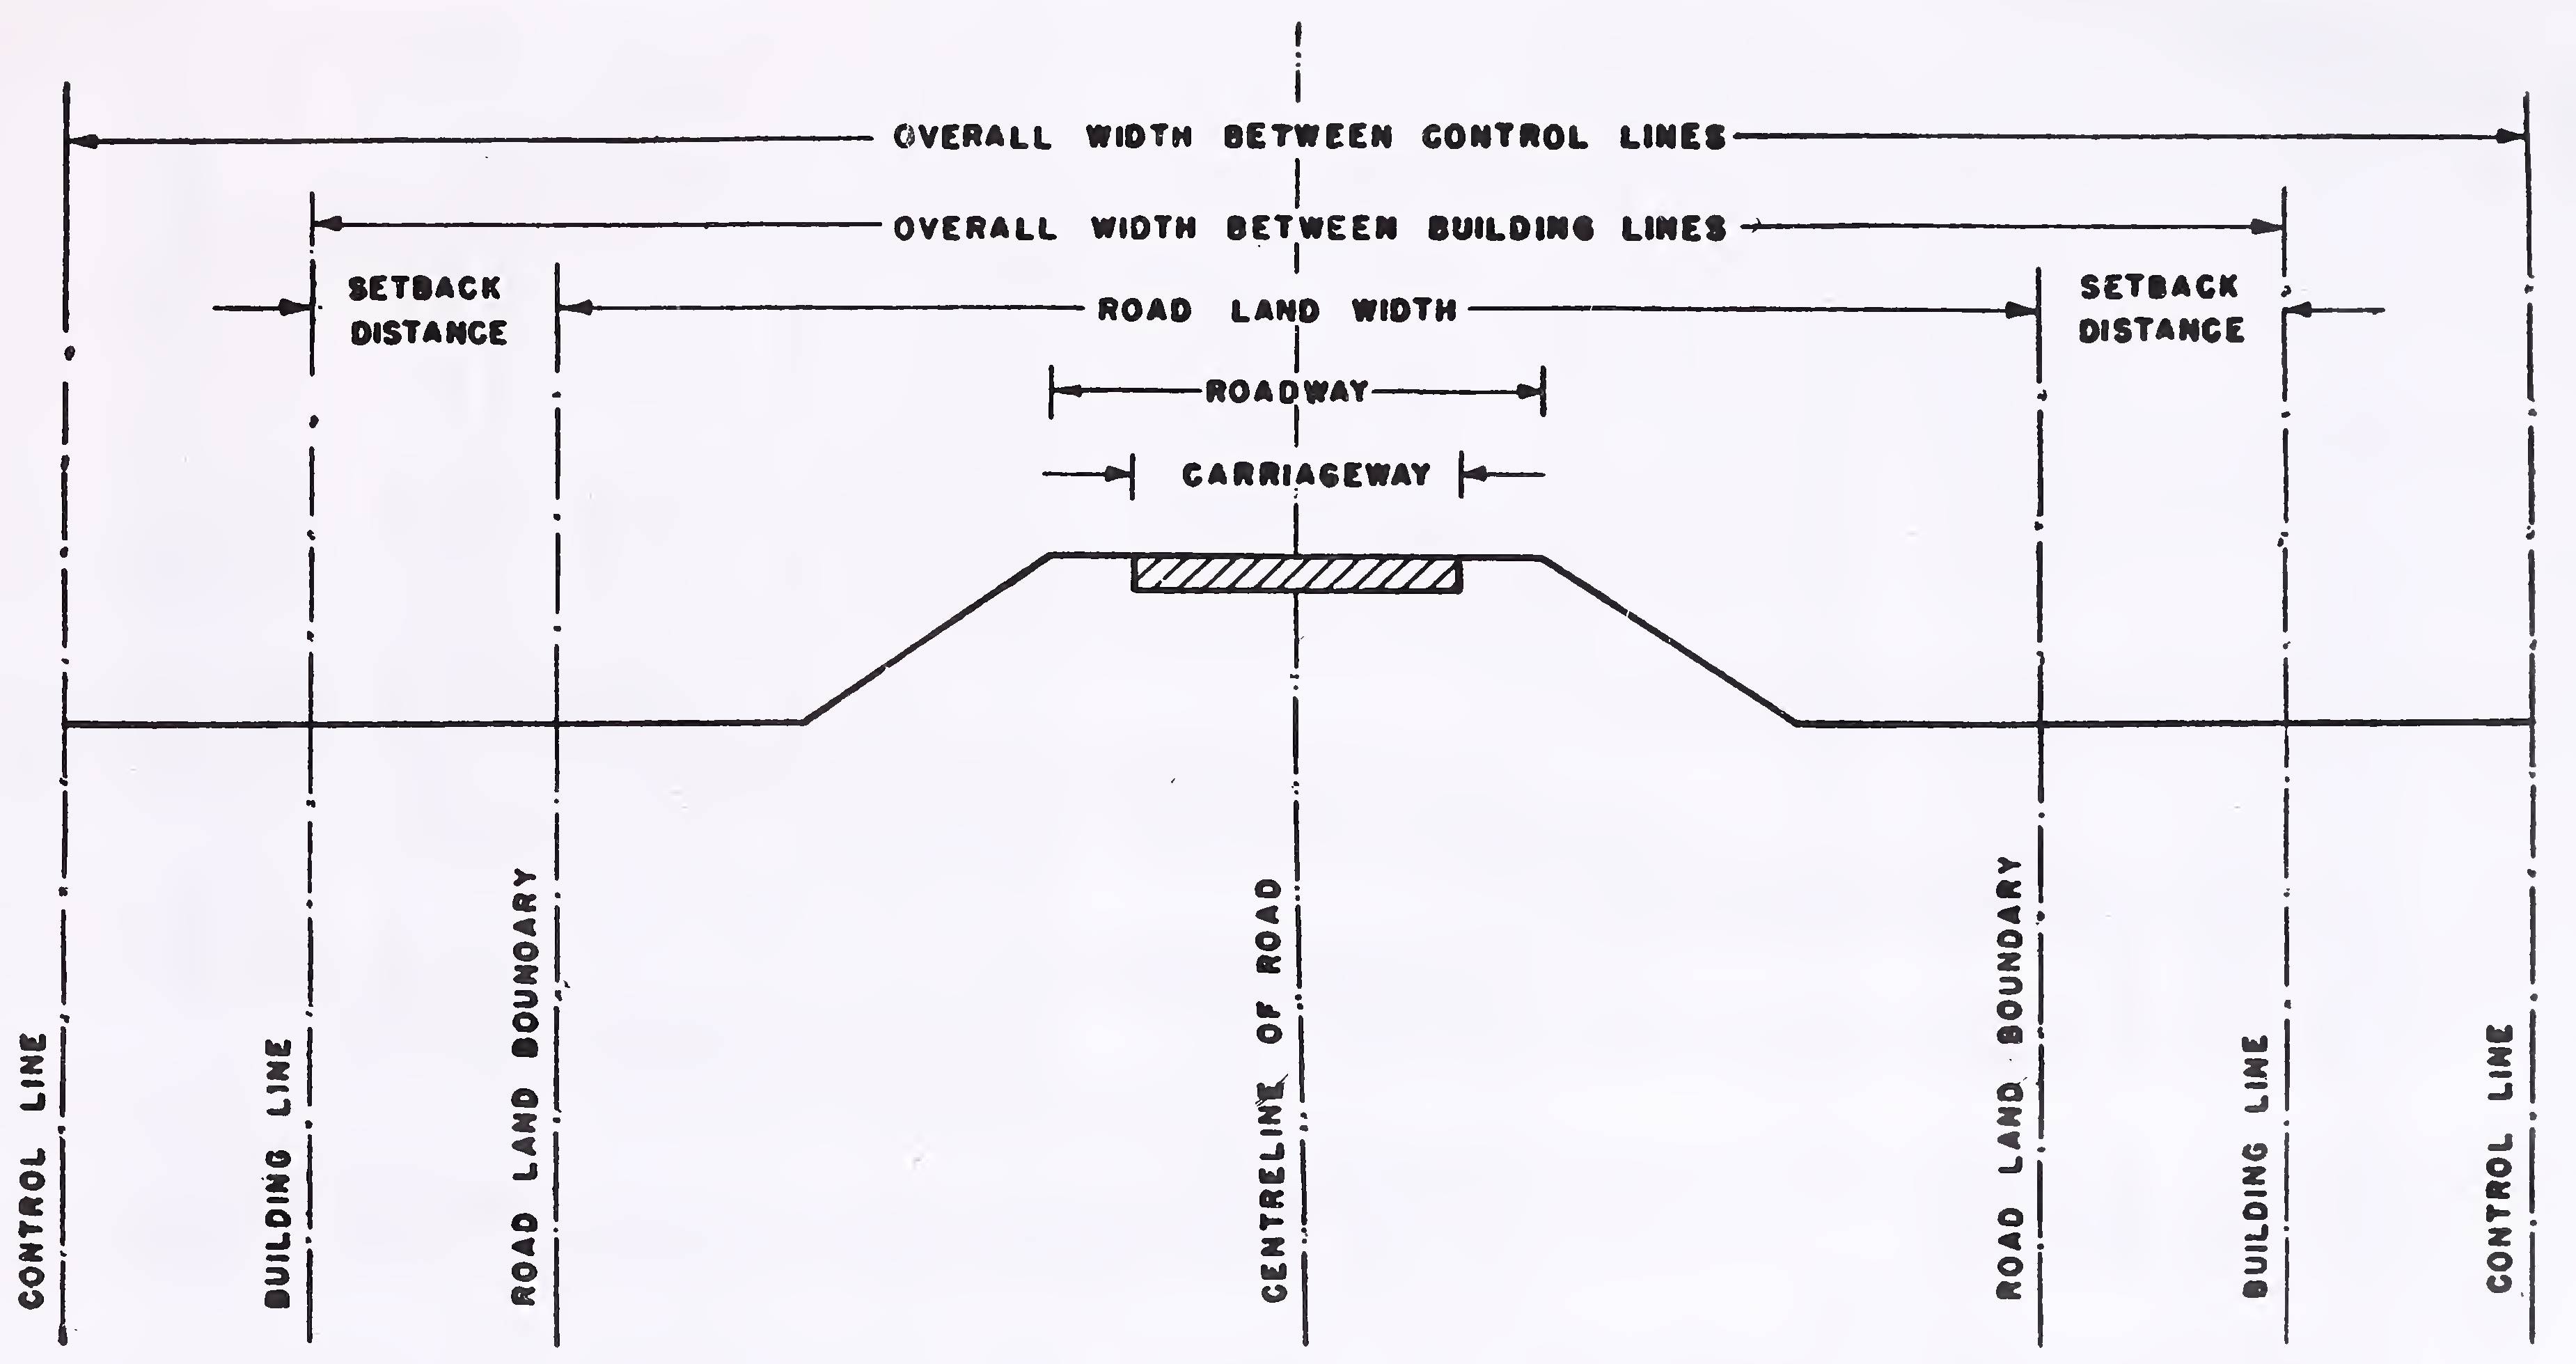 अंजीर. 1. रस्ता जमीन सीमा, इमारत रेषा आणि नियंत्रण रेषा